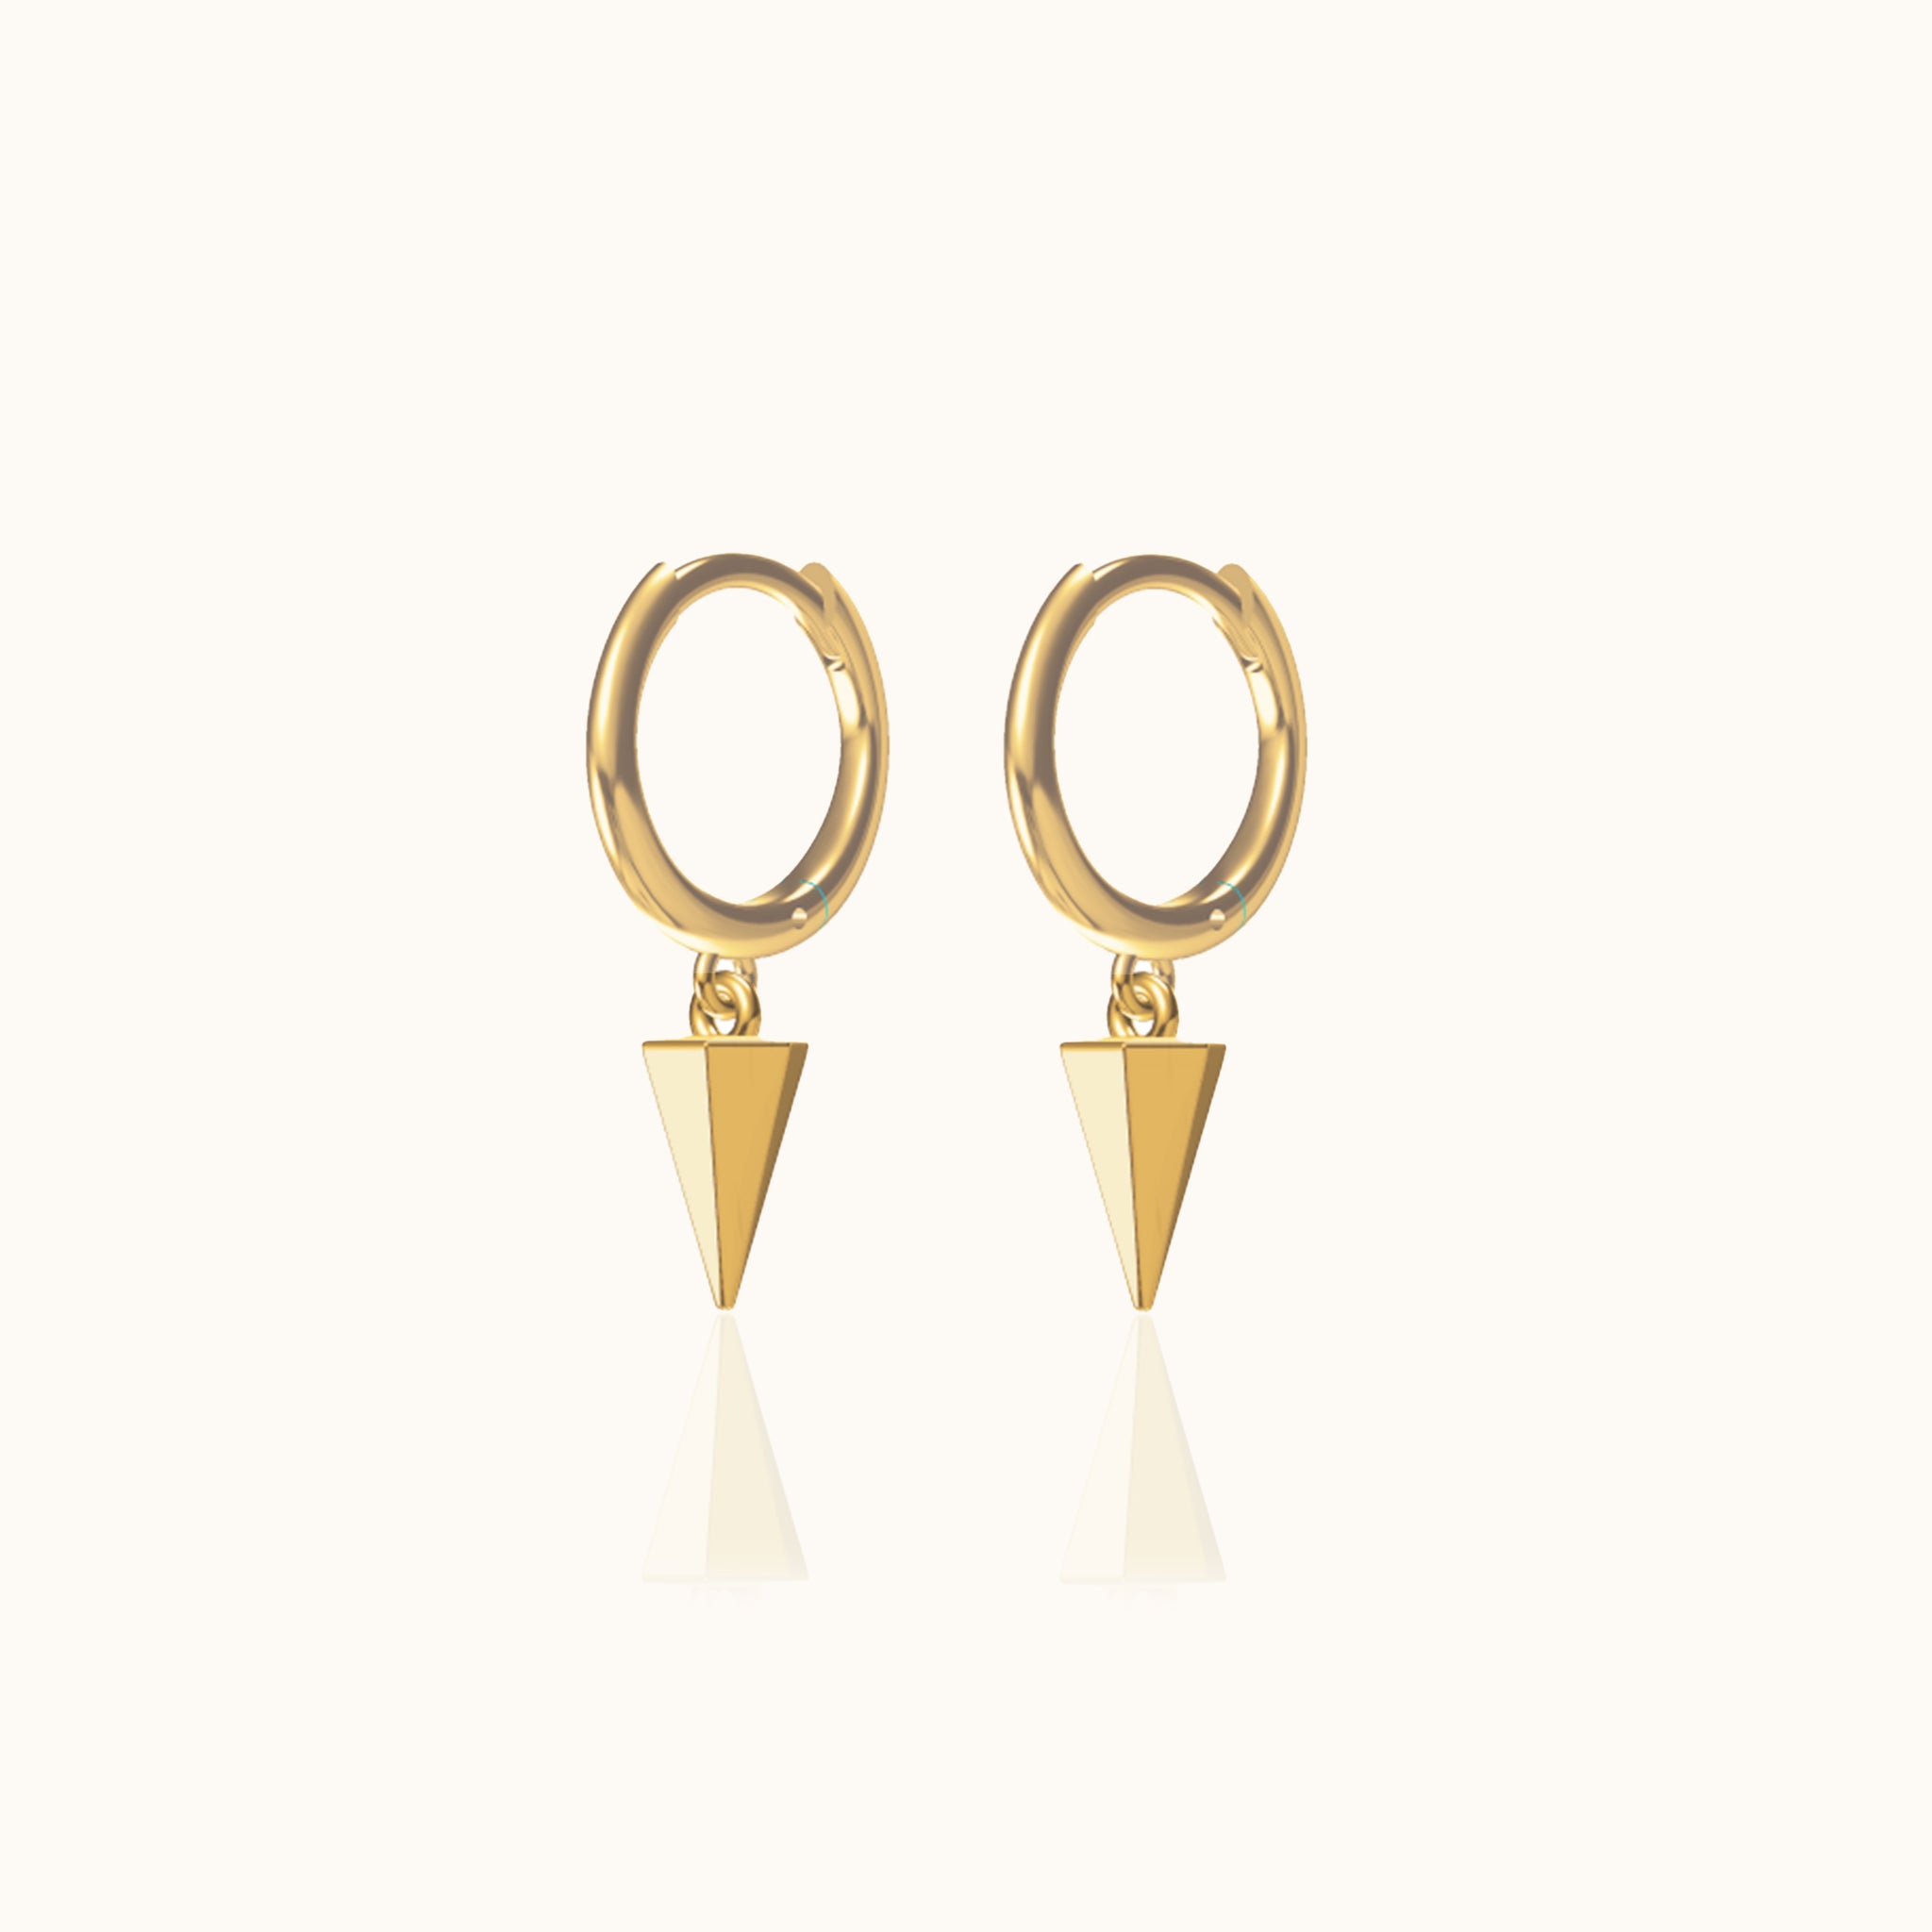 Gothic Spike Hoop Earrings Edgy Sleek Charm Dangle Gold Huggie Hoops by Doviana